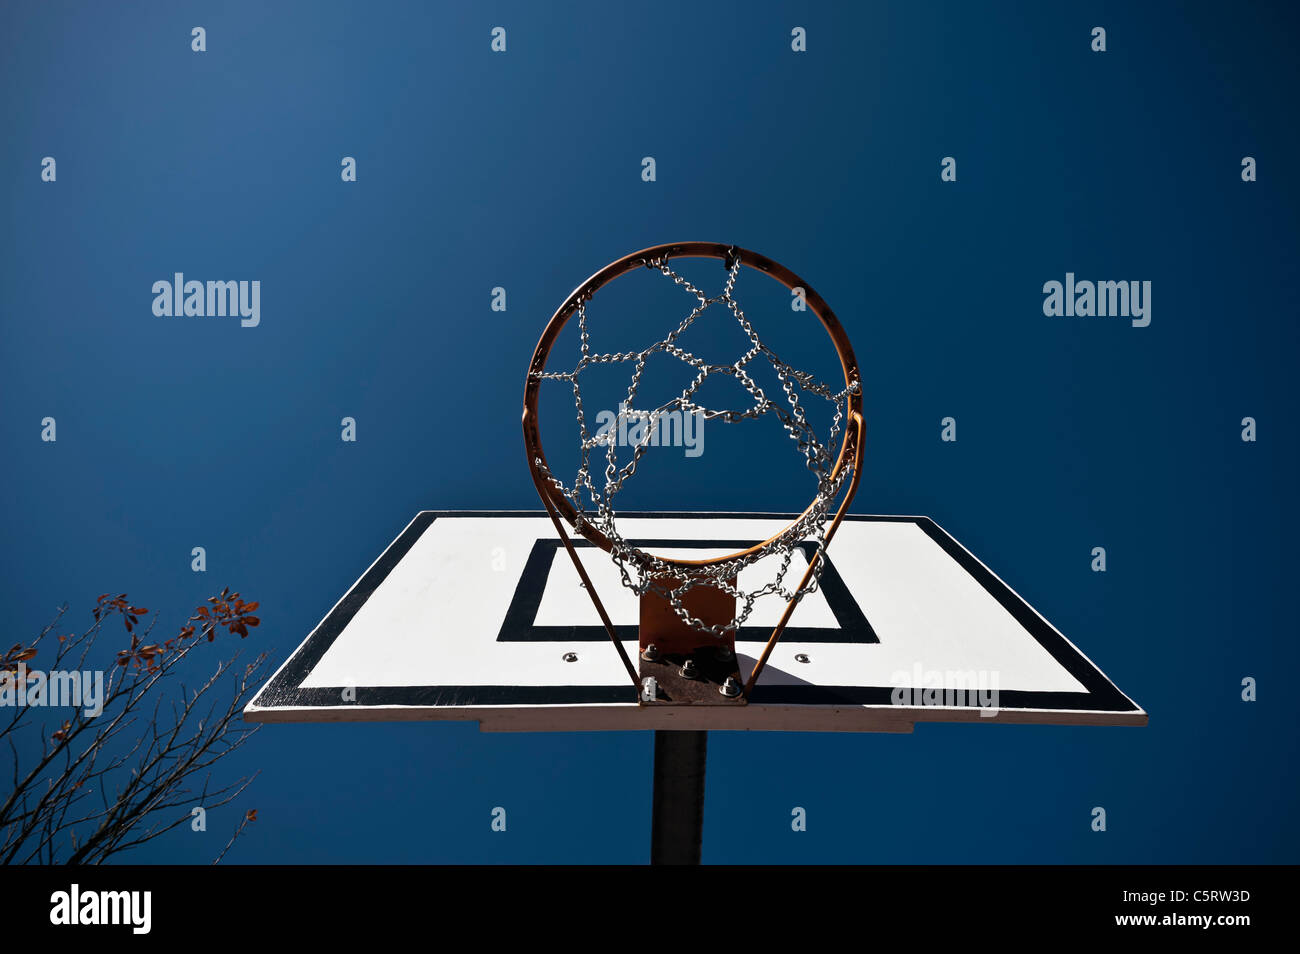 Germany, North Rhine-Westphalia, DÃ¼sseldorf, Empty basketball hoop against blue sky Stock Photo